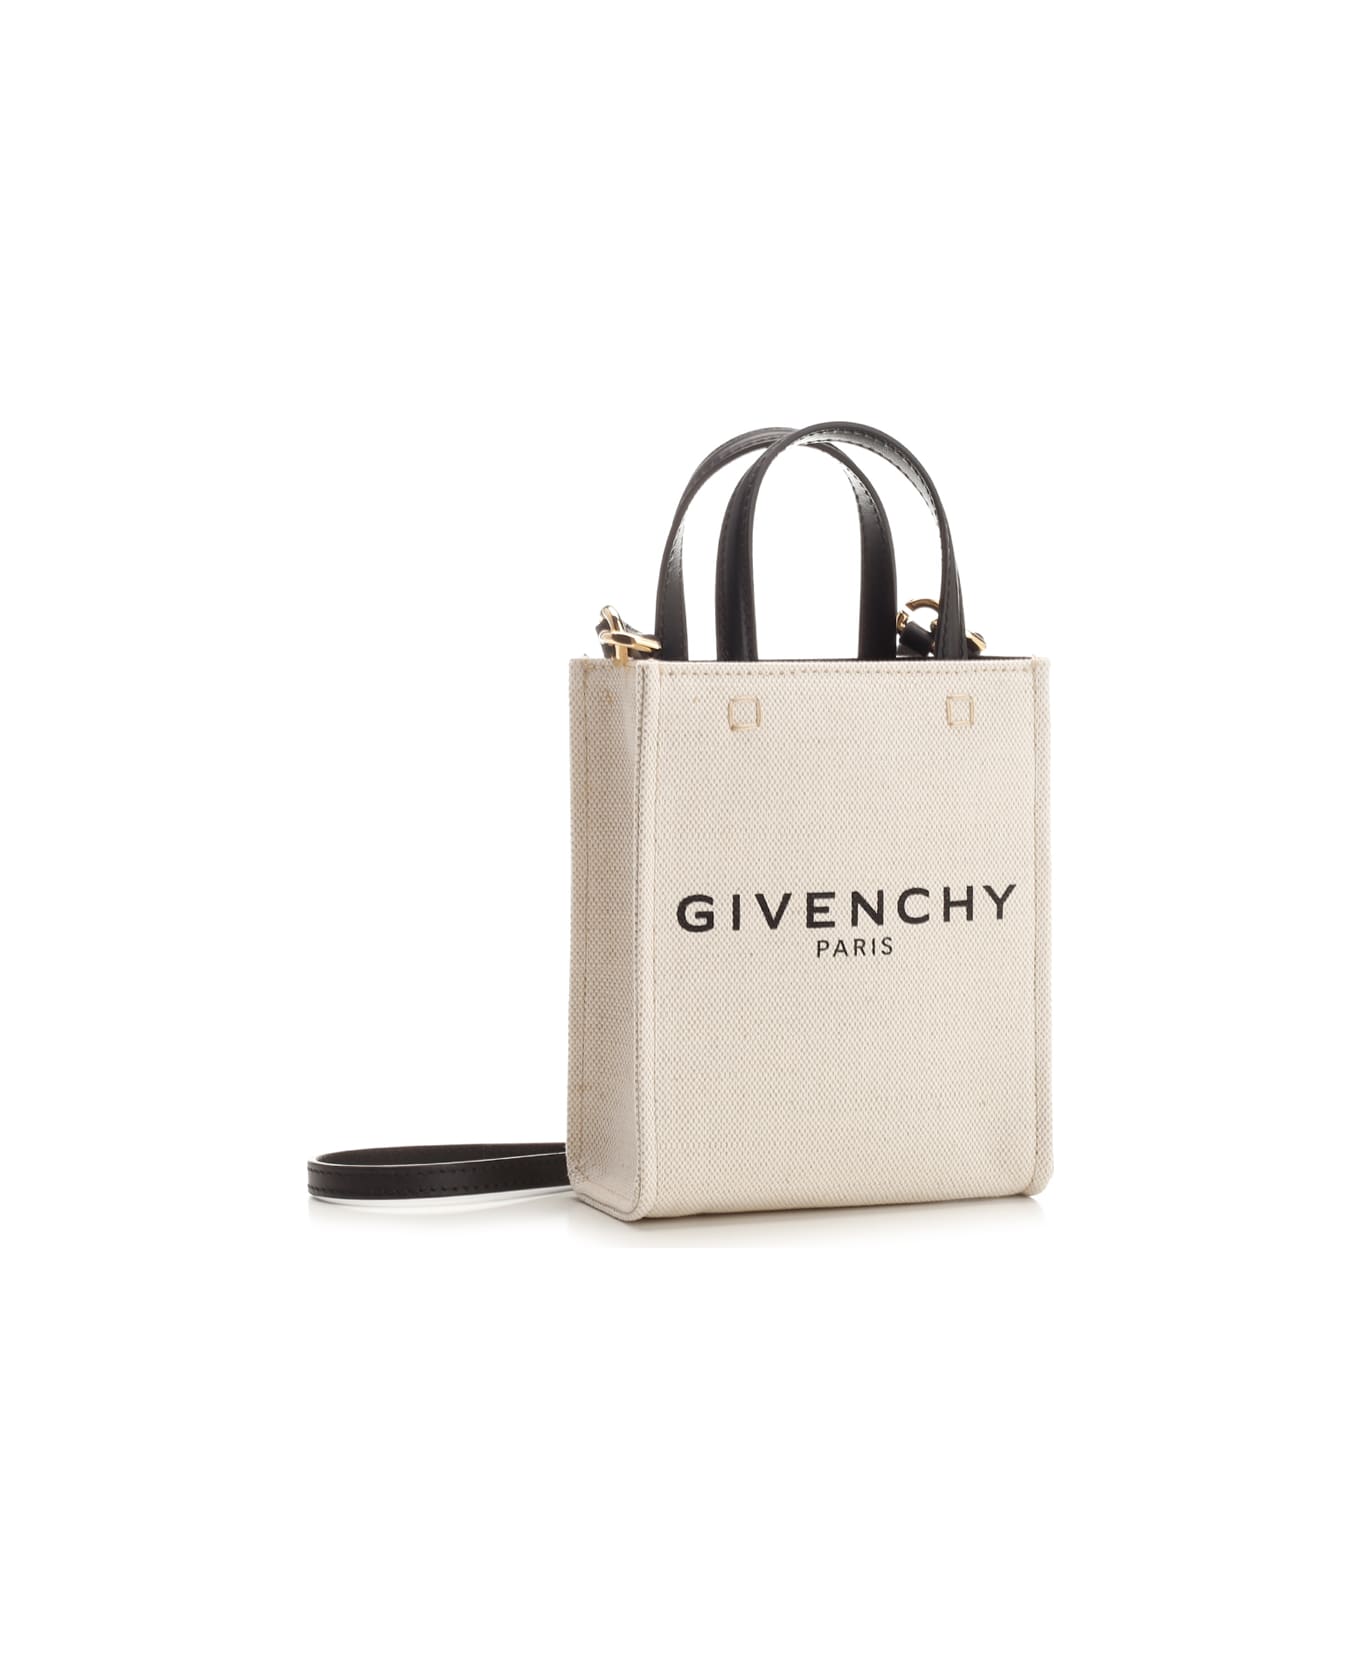 Givenchy "g Tote" Mini Bag - Beige